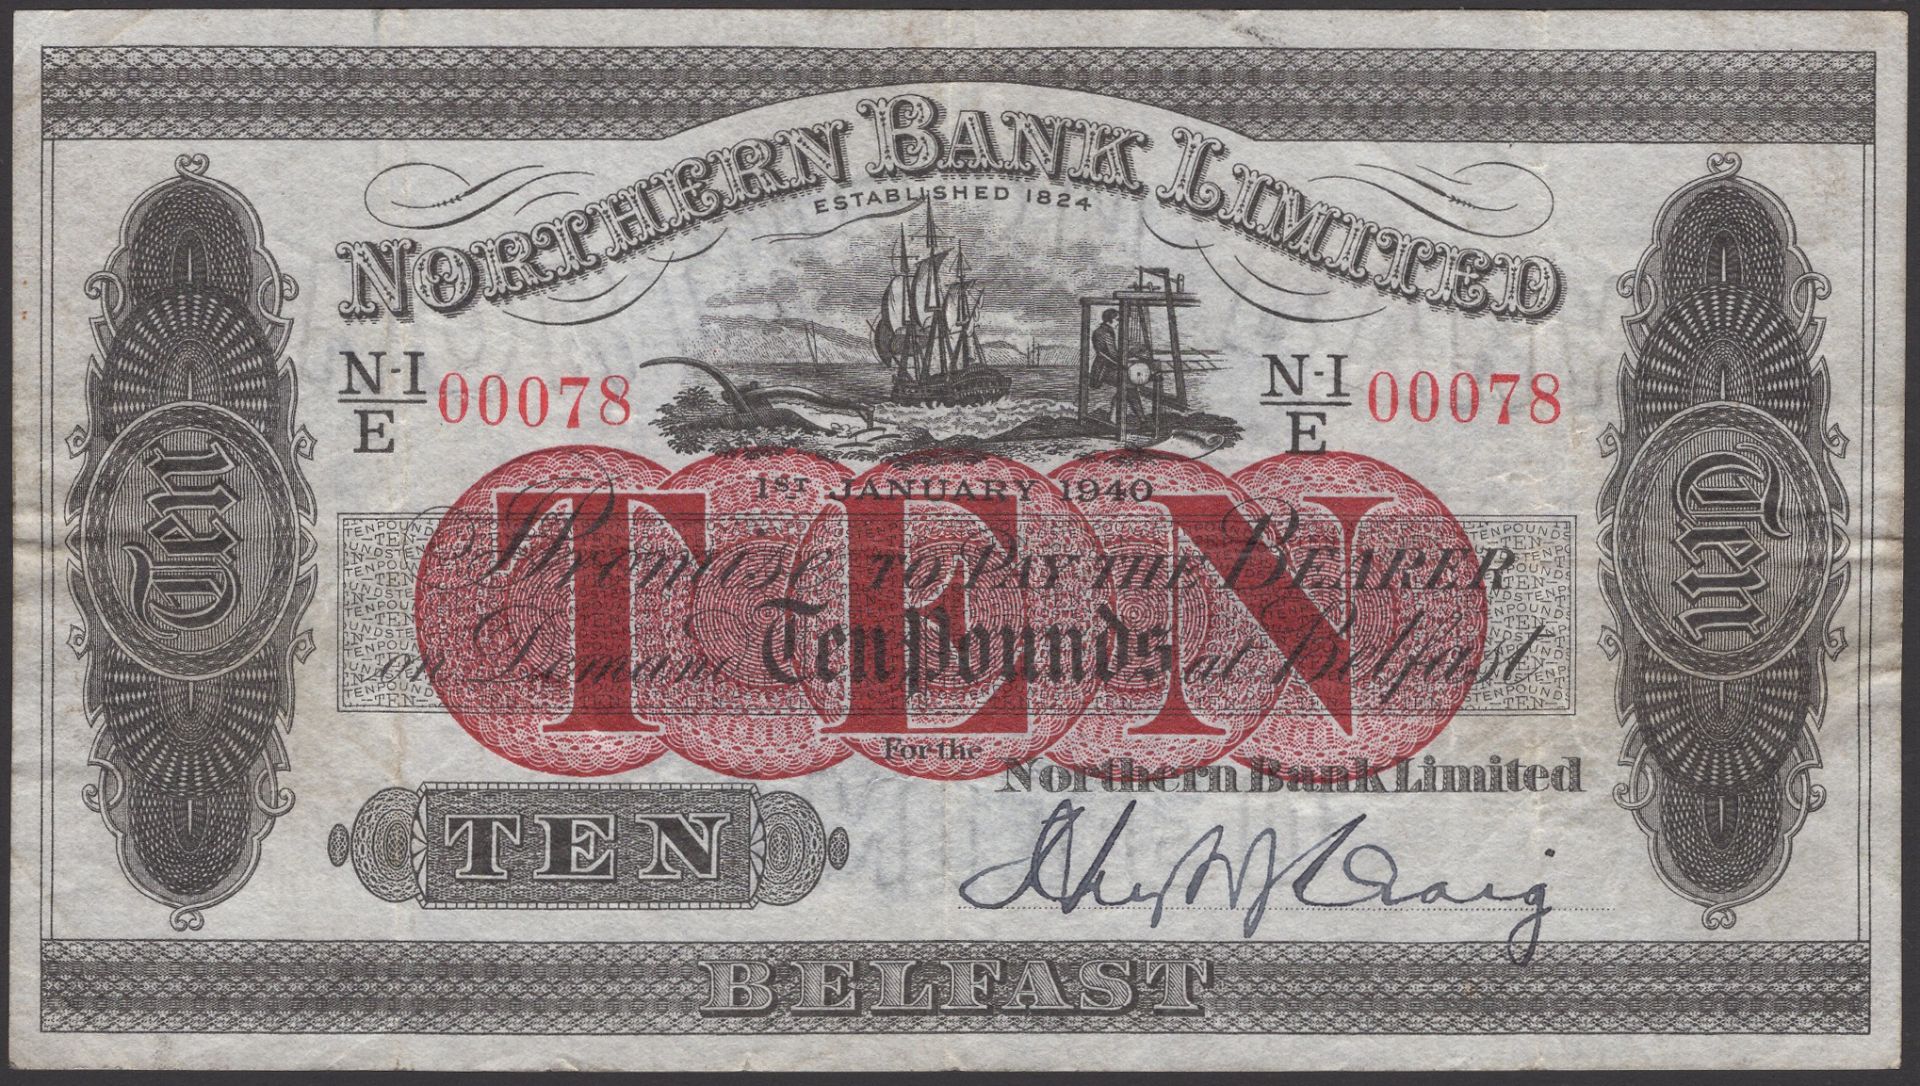 Northern Bank Limited, Â£10, 1 January 1940, serial number N-I/E 00078, Craig signature, orig...